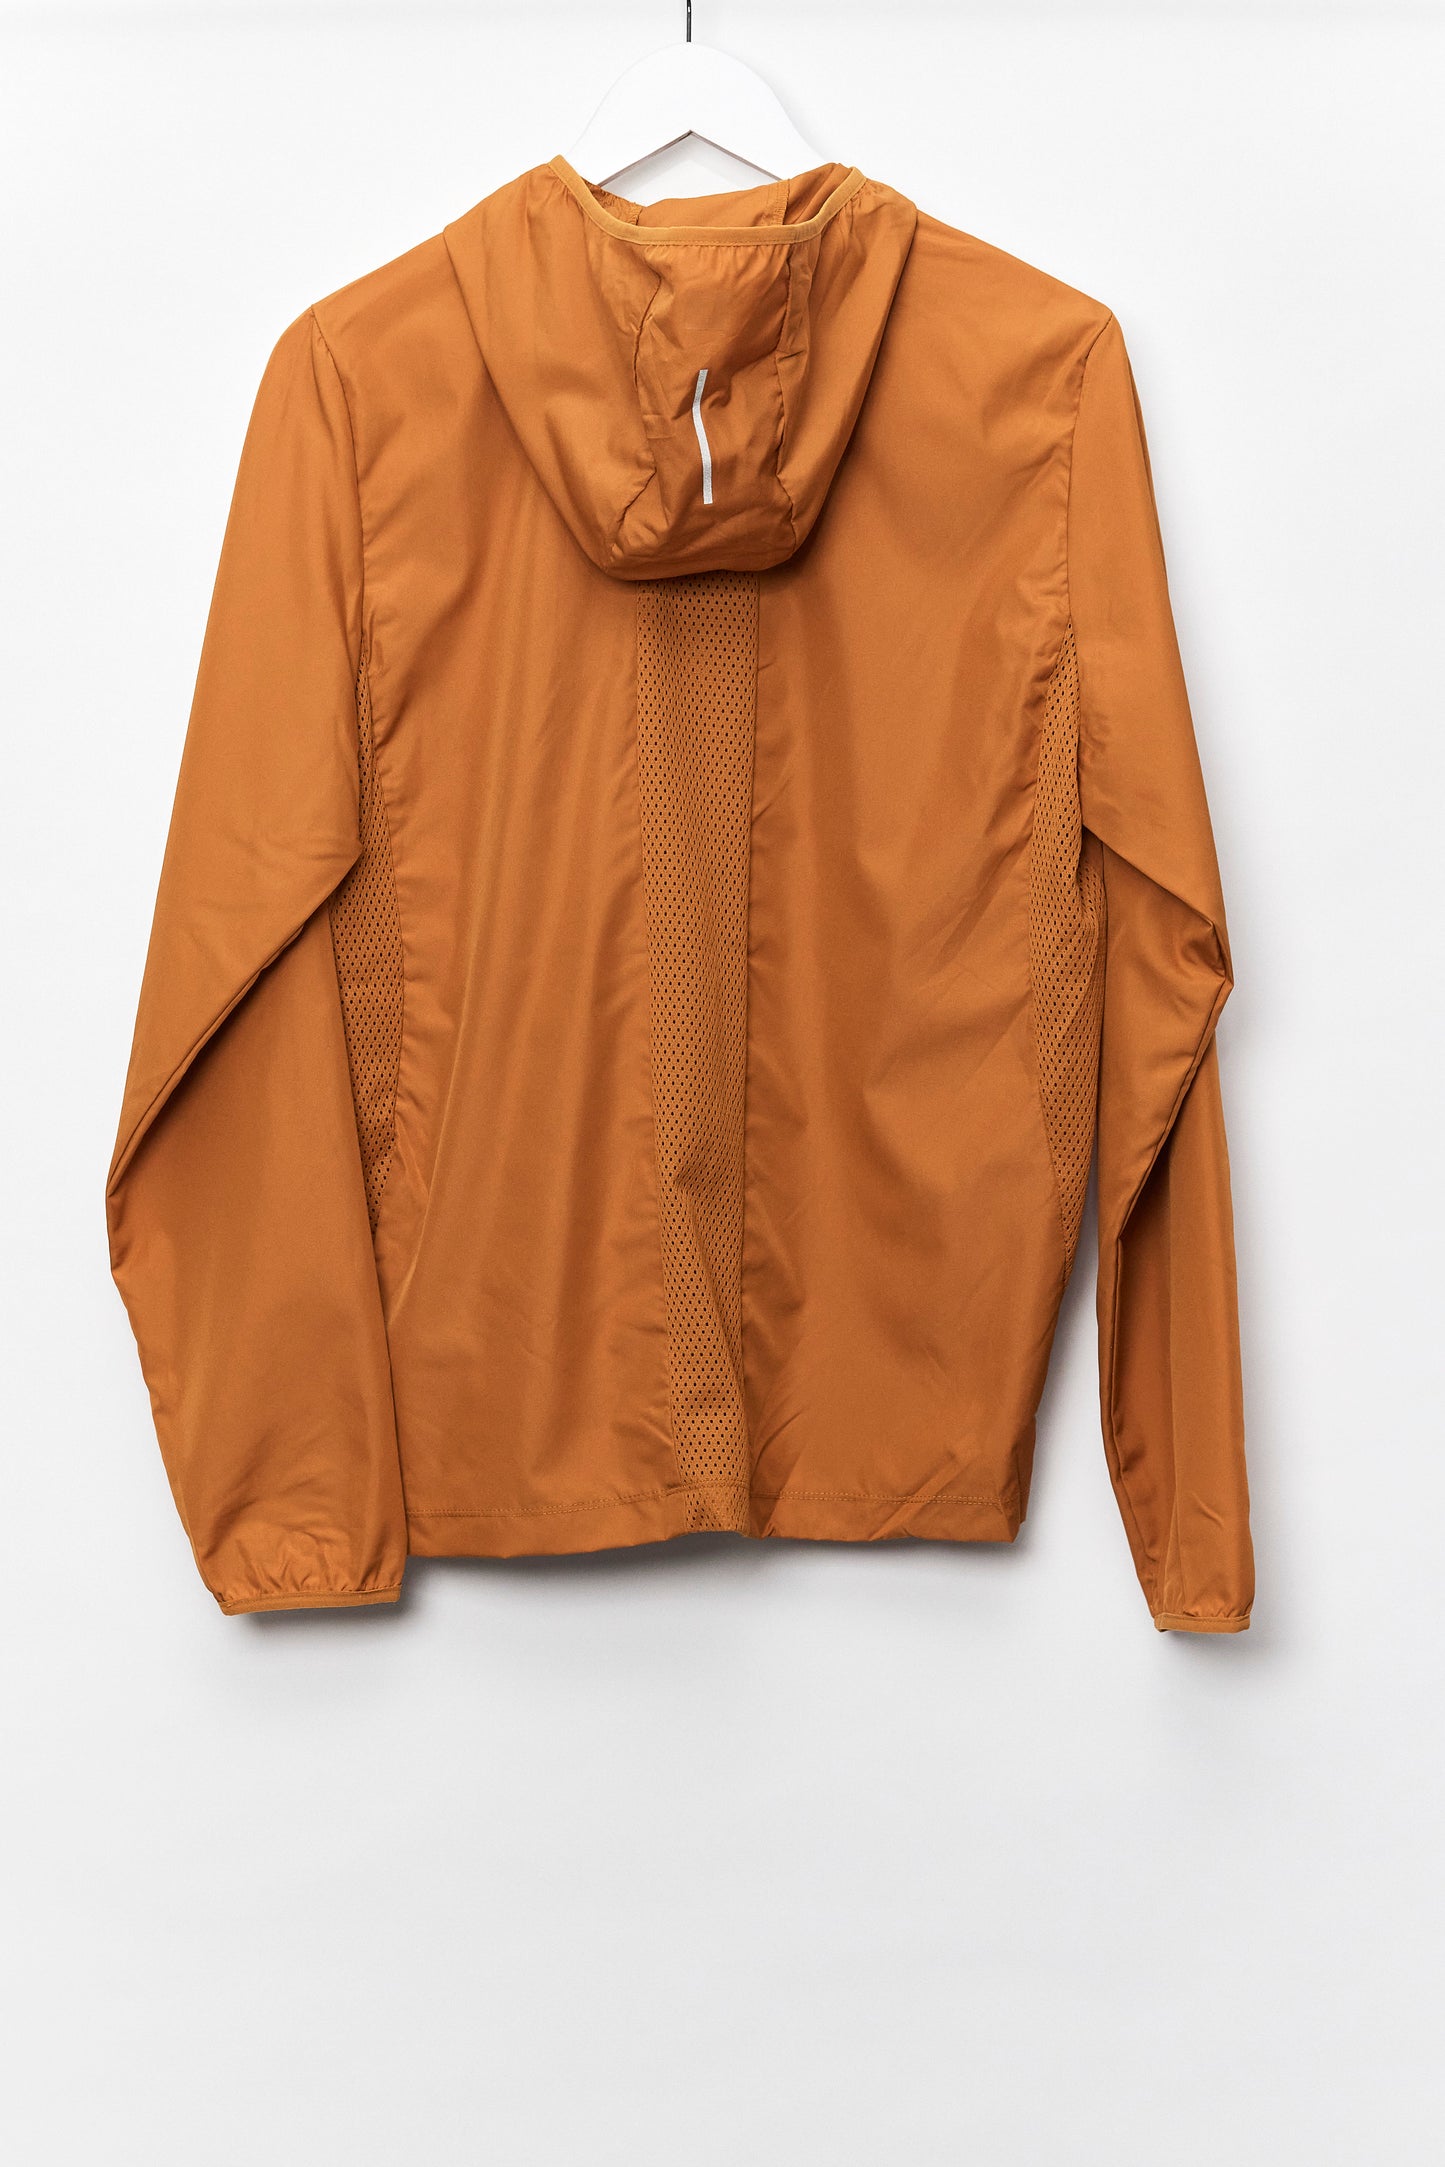 Mens Burnt Orange Running Jacket size Medium